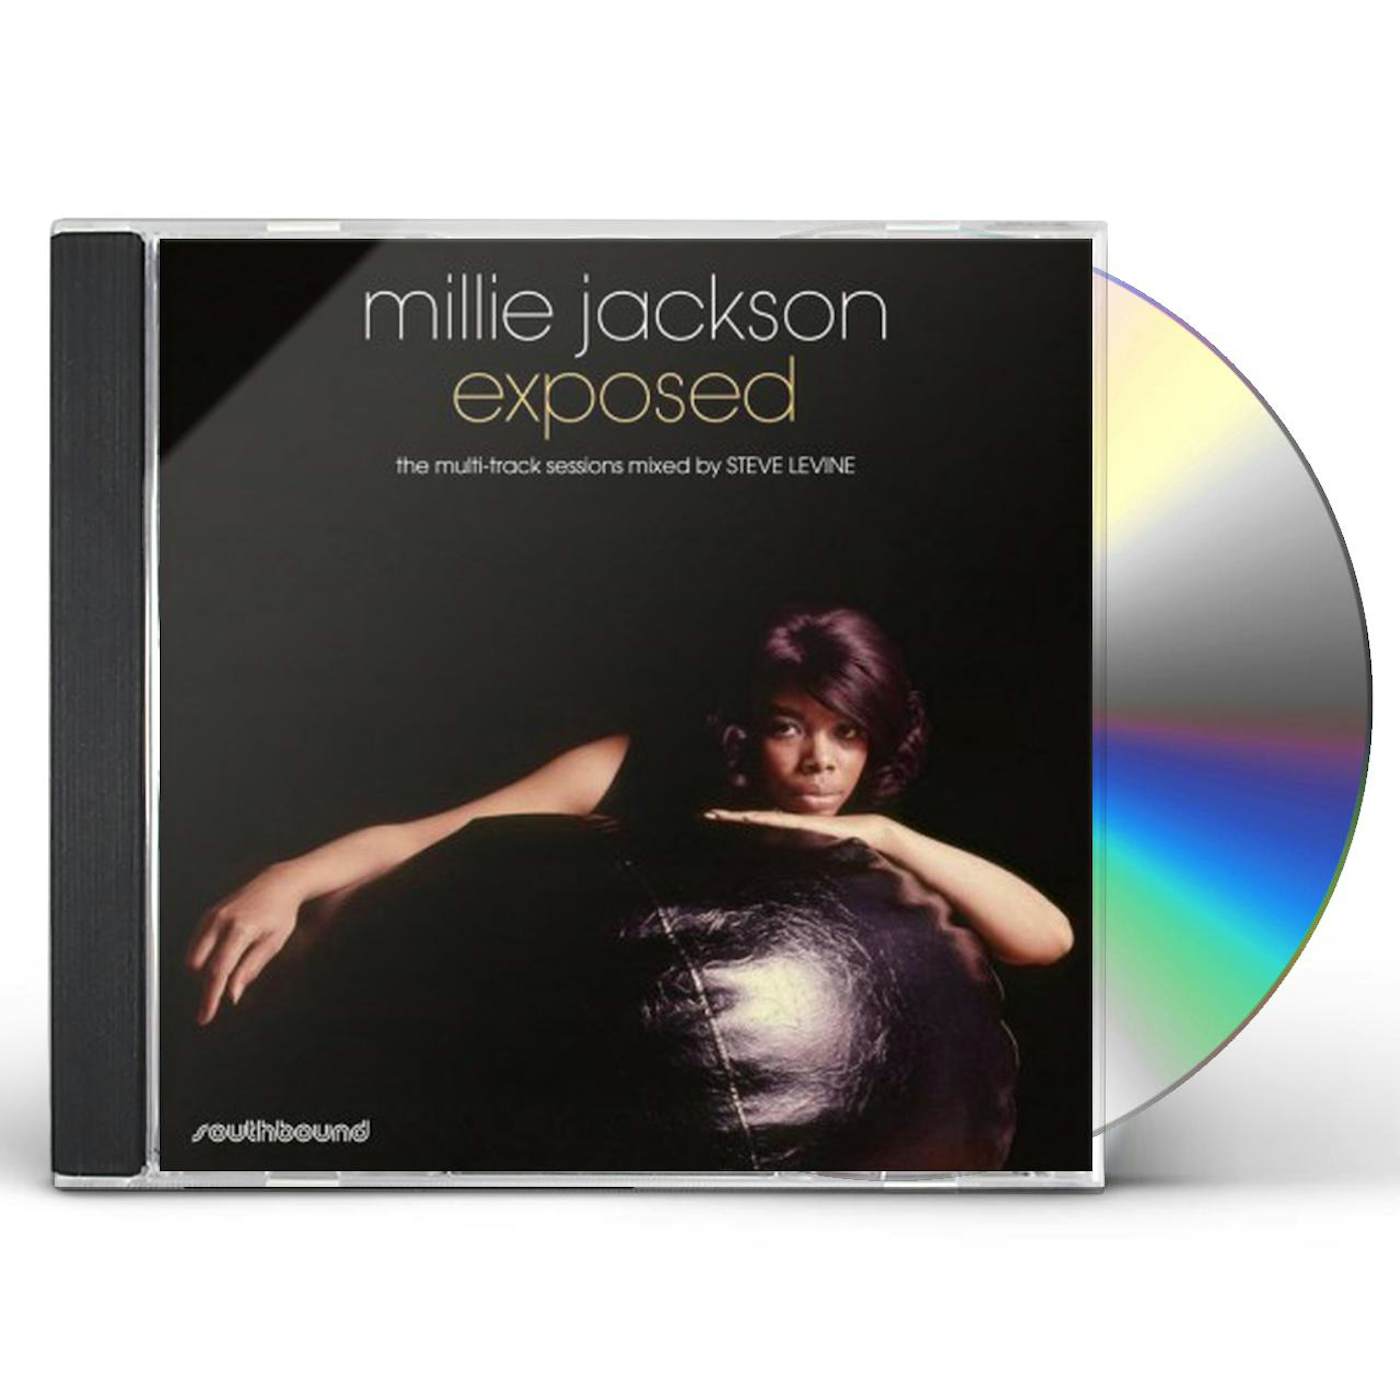 Millie Jackson EXPOSED: MULTI-TRACK SESSIONS MIXED STEVE LEVINE CD